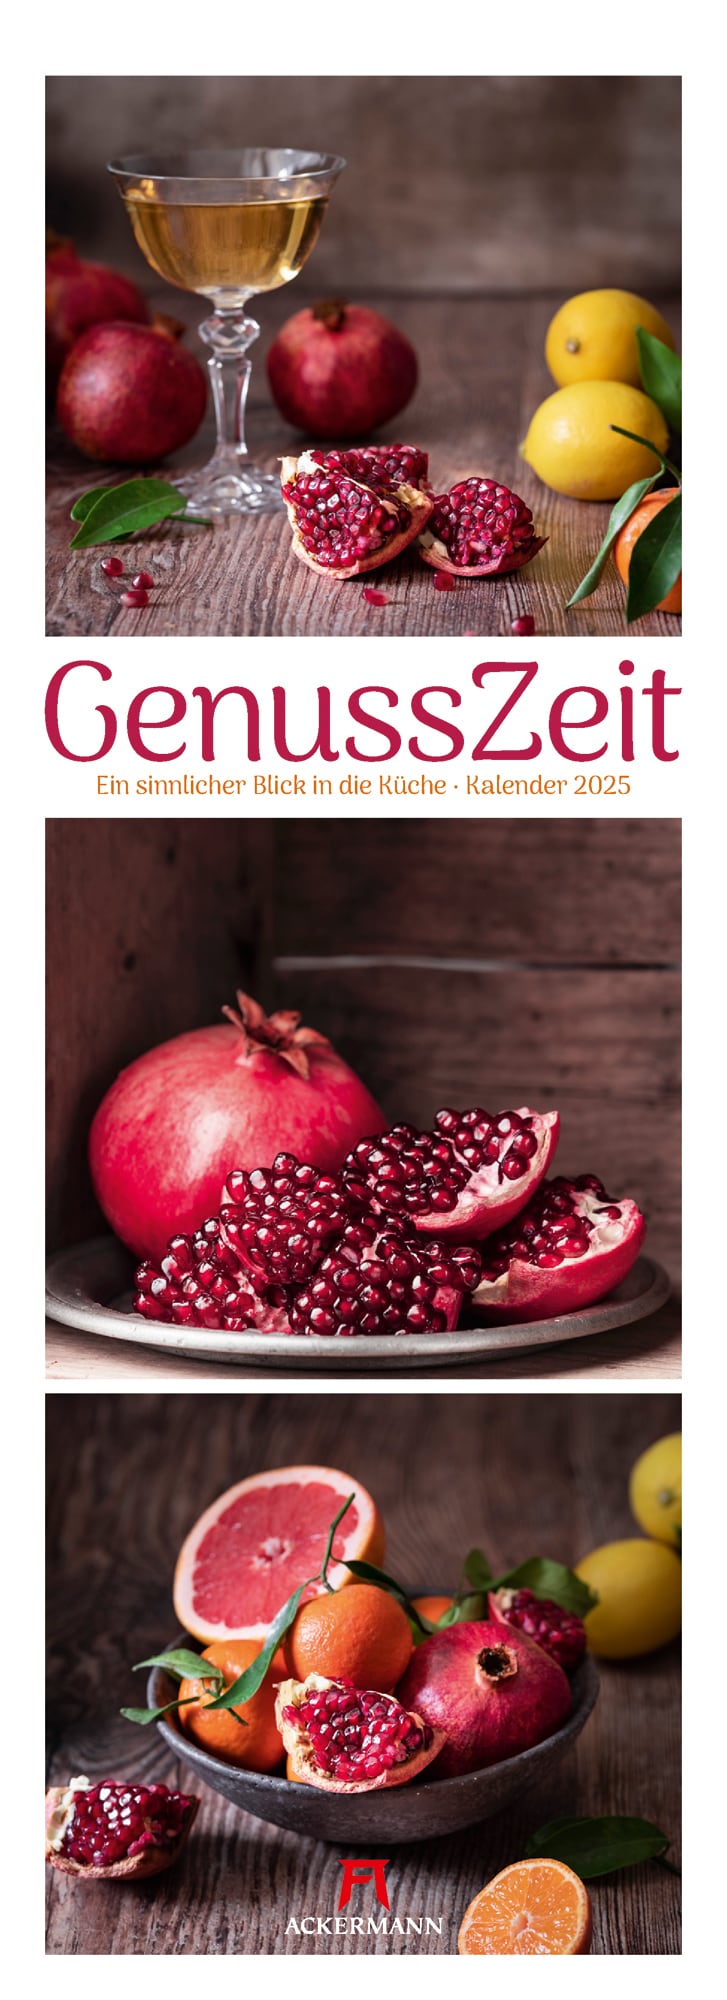 Ackermann Calendar Delicious 2025 - Cover Page